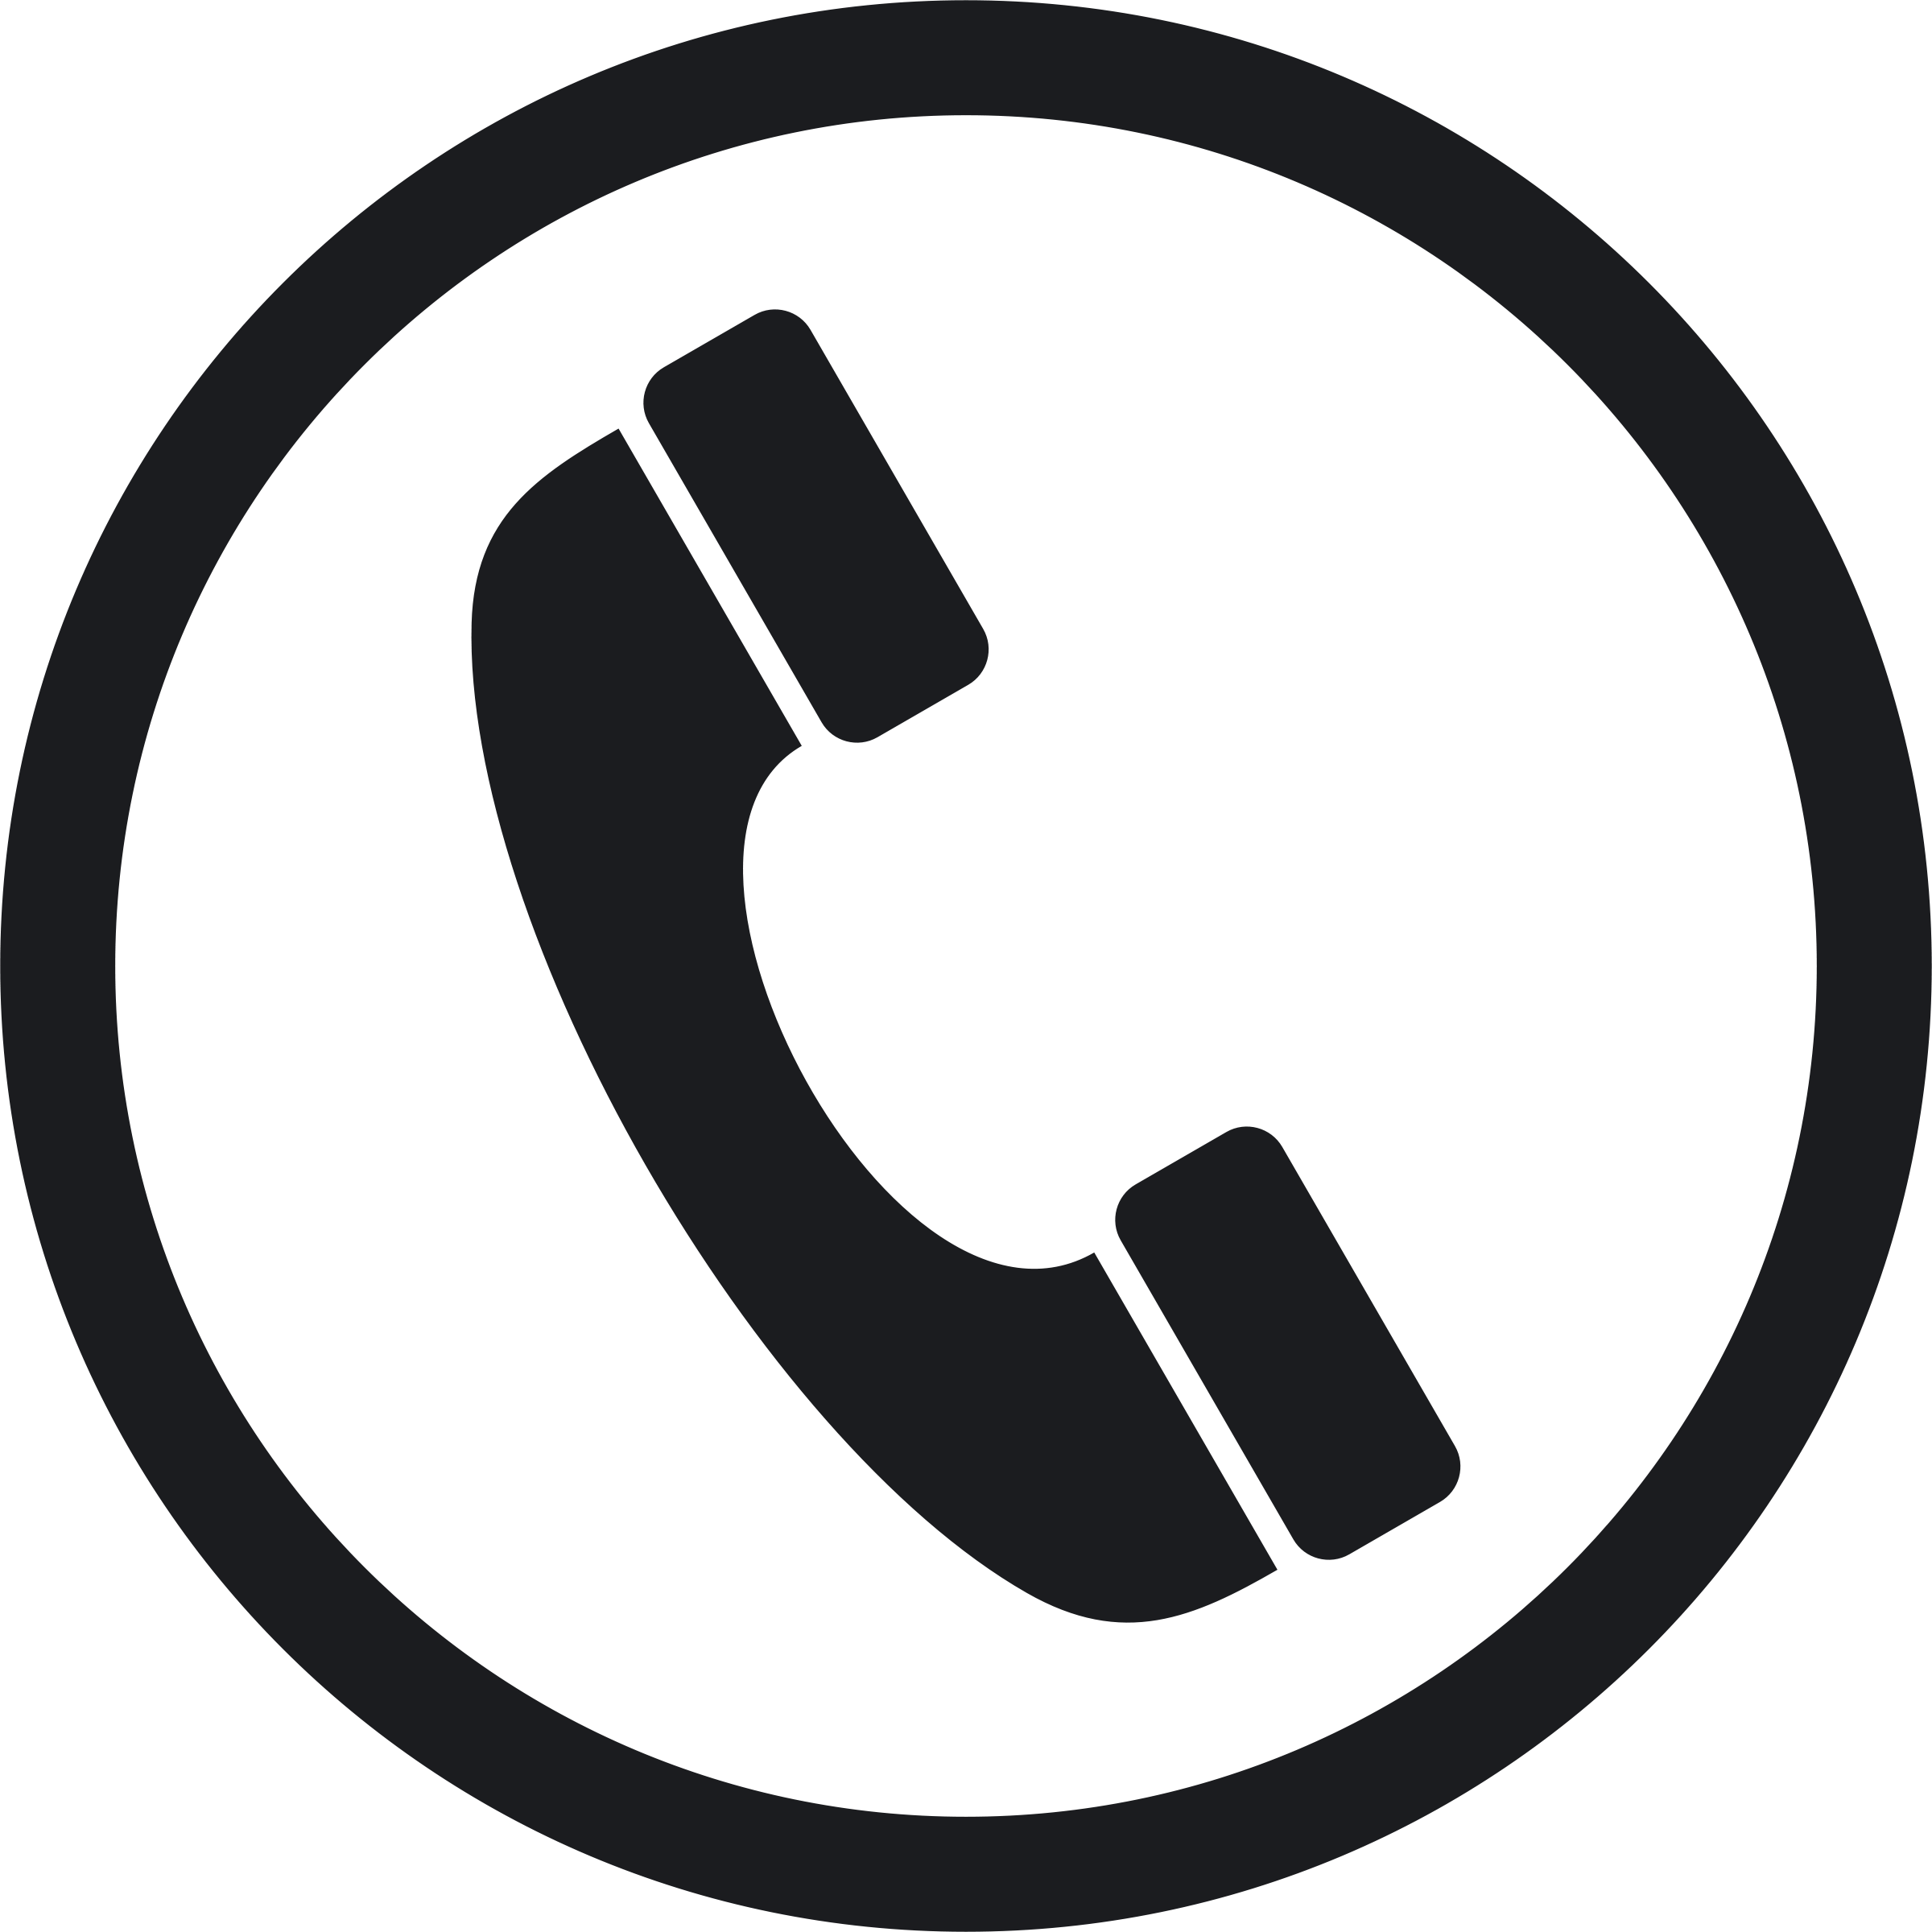 Phone Call Logo - technical | graphic symbol types | Phone icon, Phone logo, Mobile logo